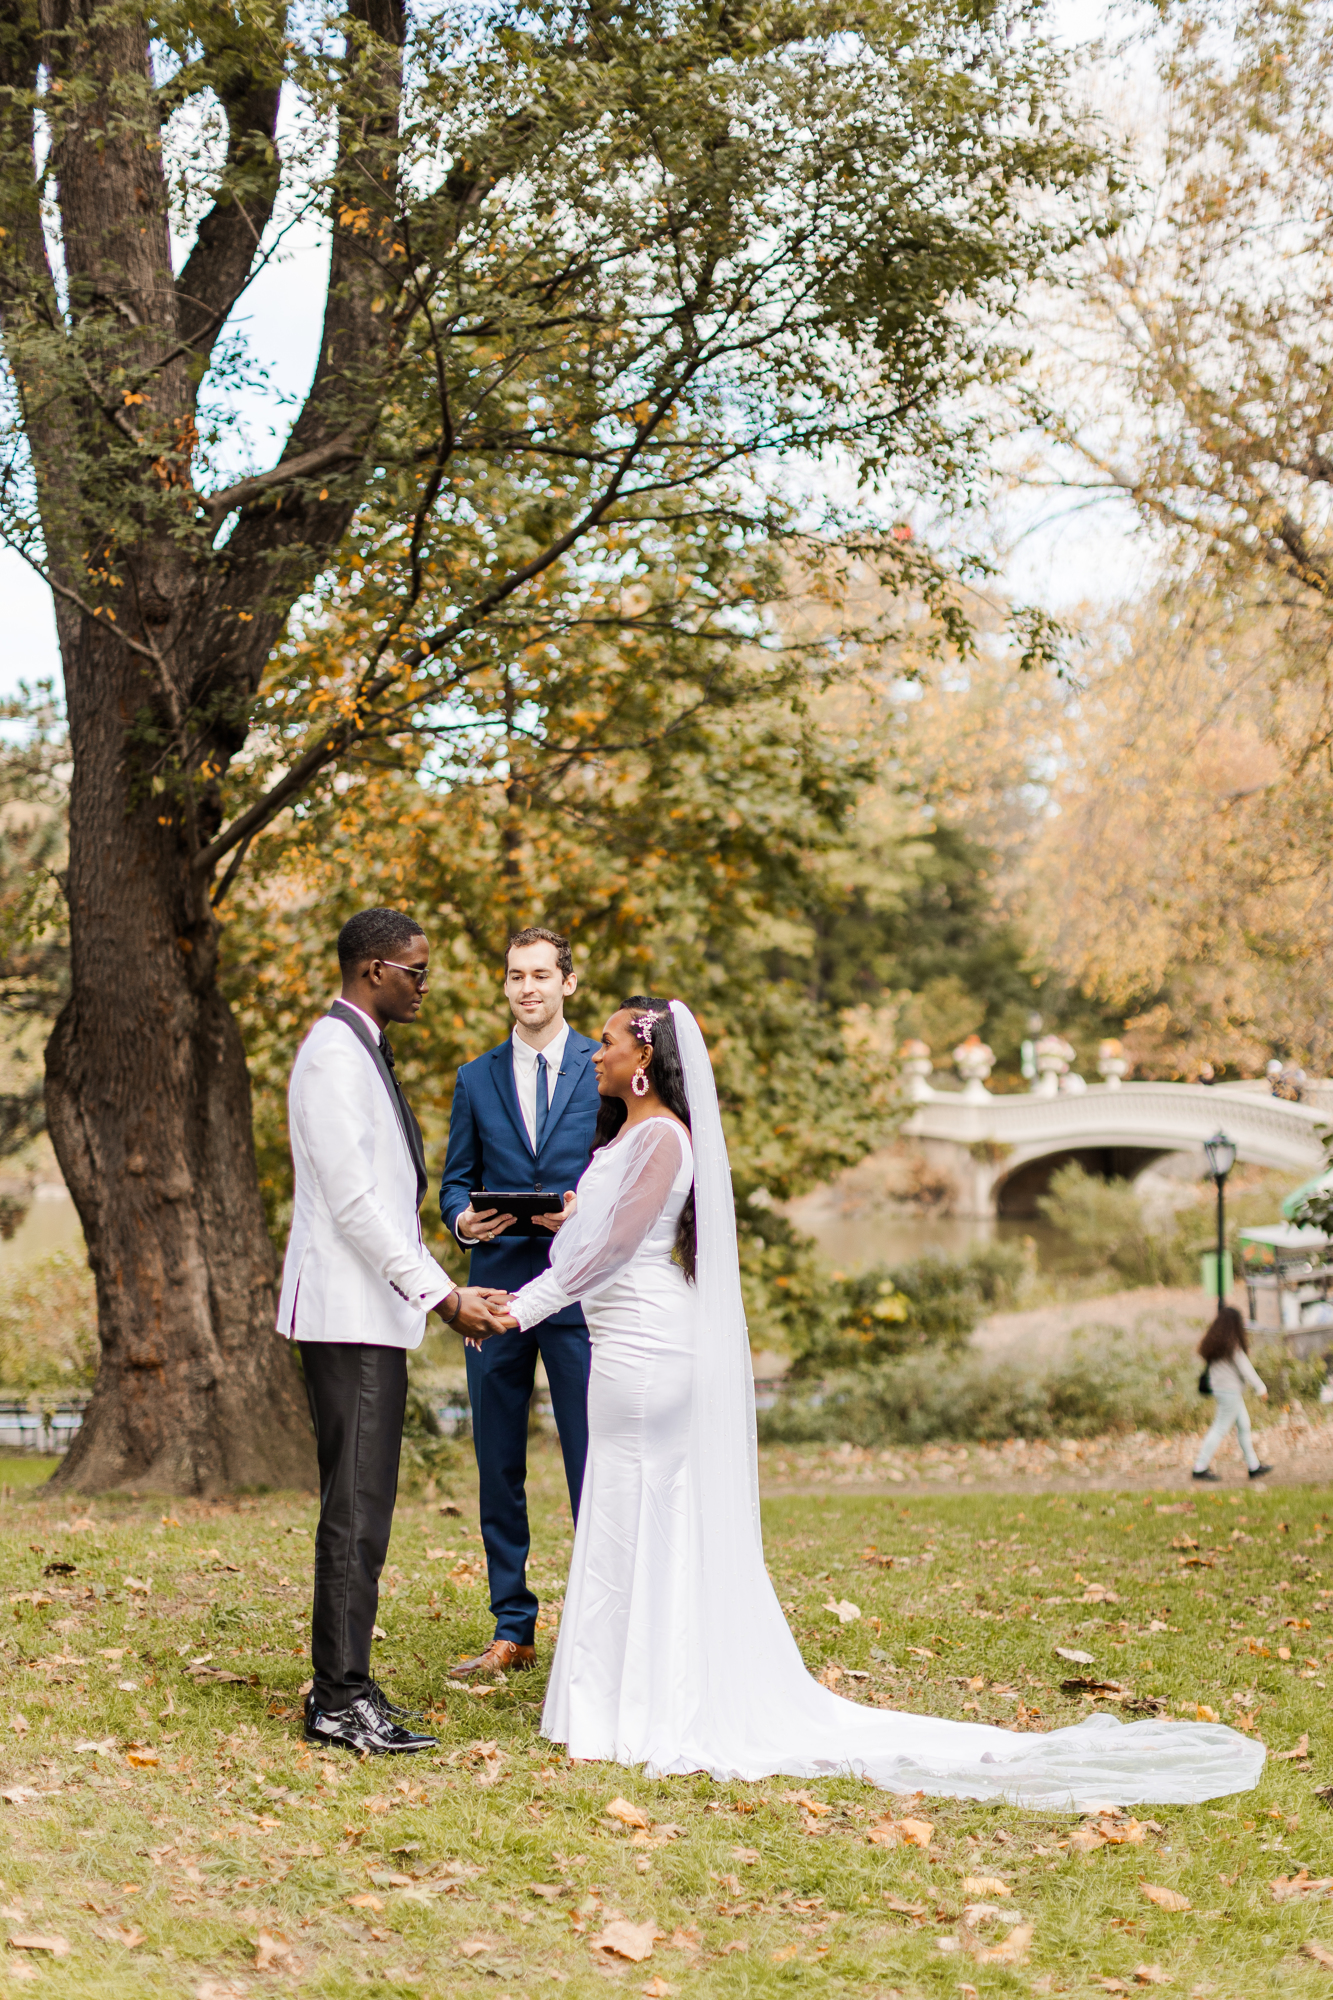 Idyllic Central Park Wedding Photos on Cherry Hill in Fall